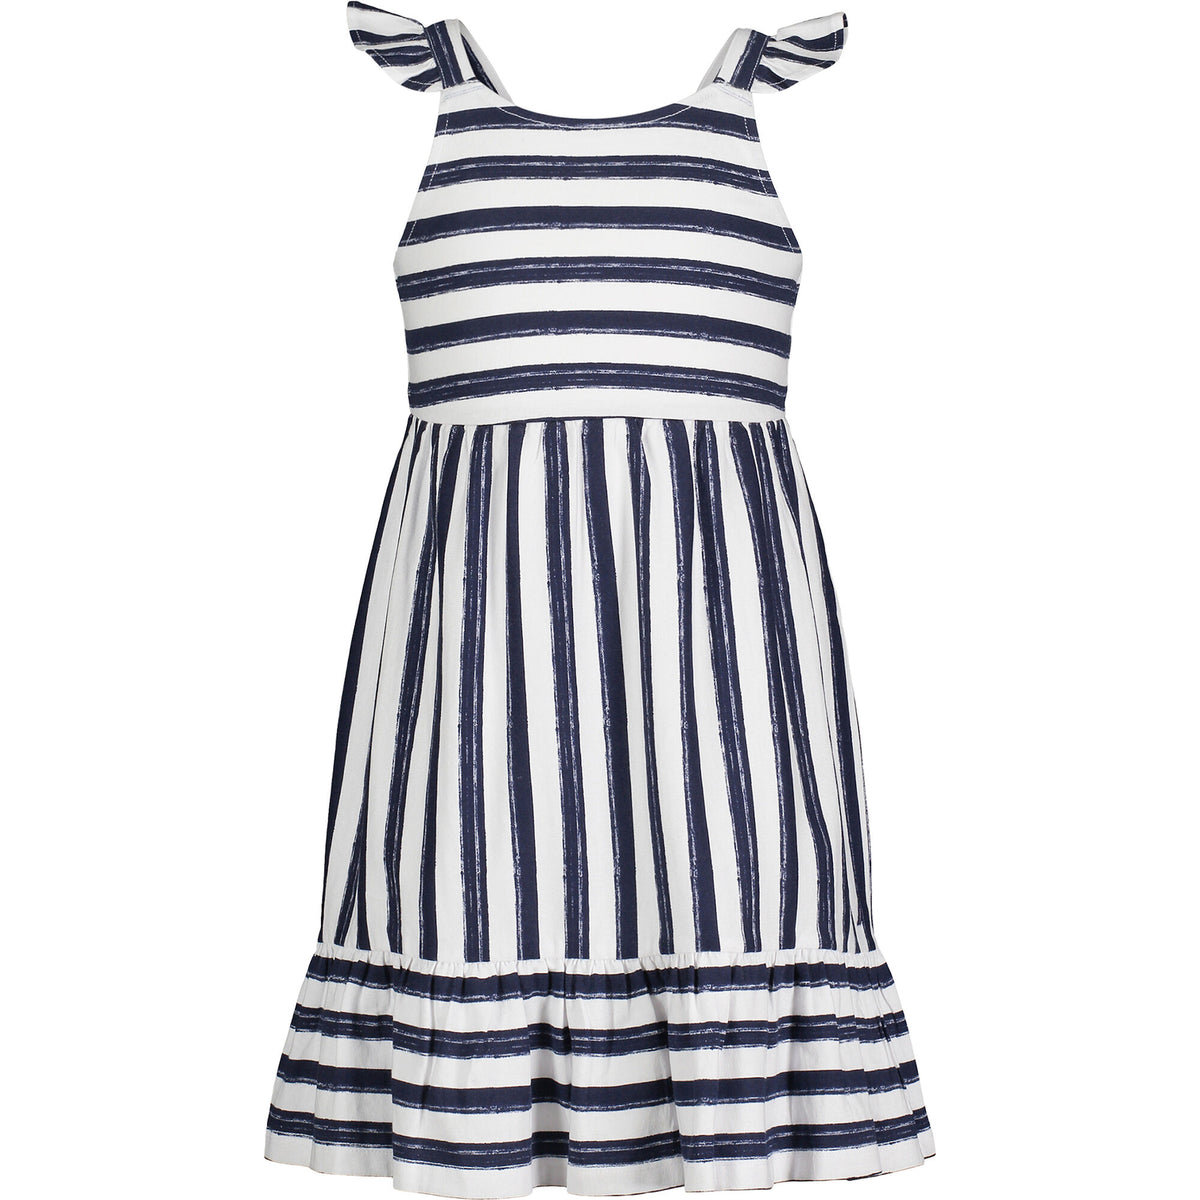 Nautica Toddler Girls' Watercolor-Stripe Dress (2T-4T) Navy